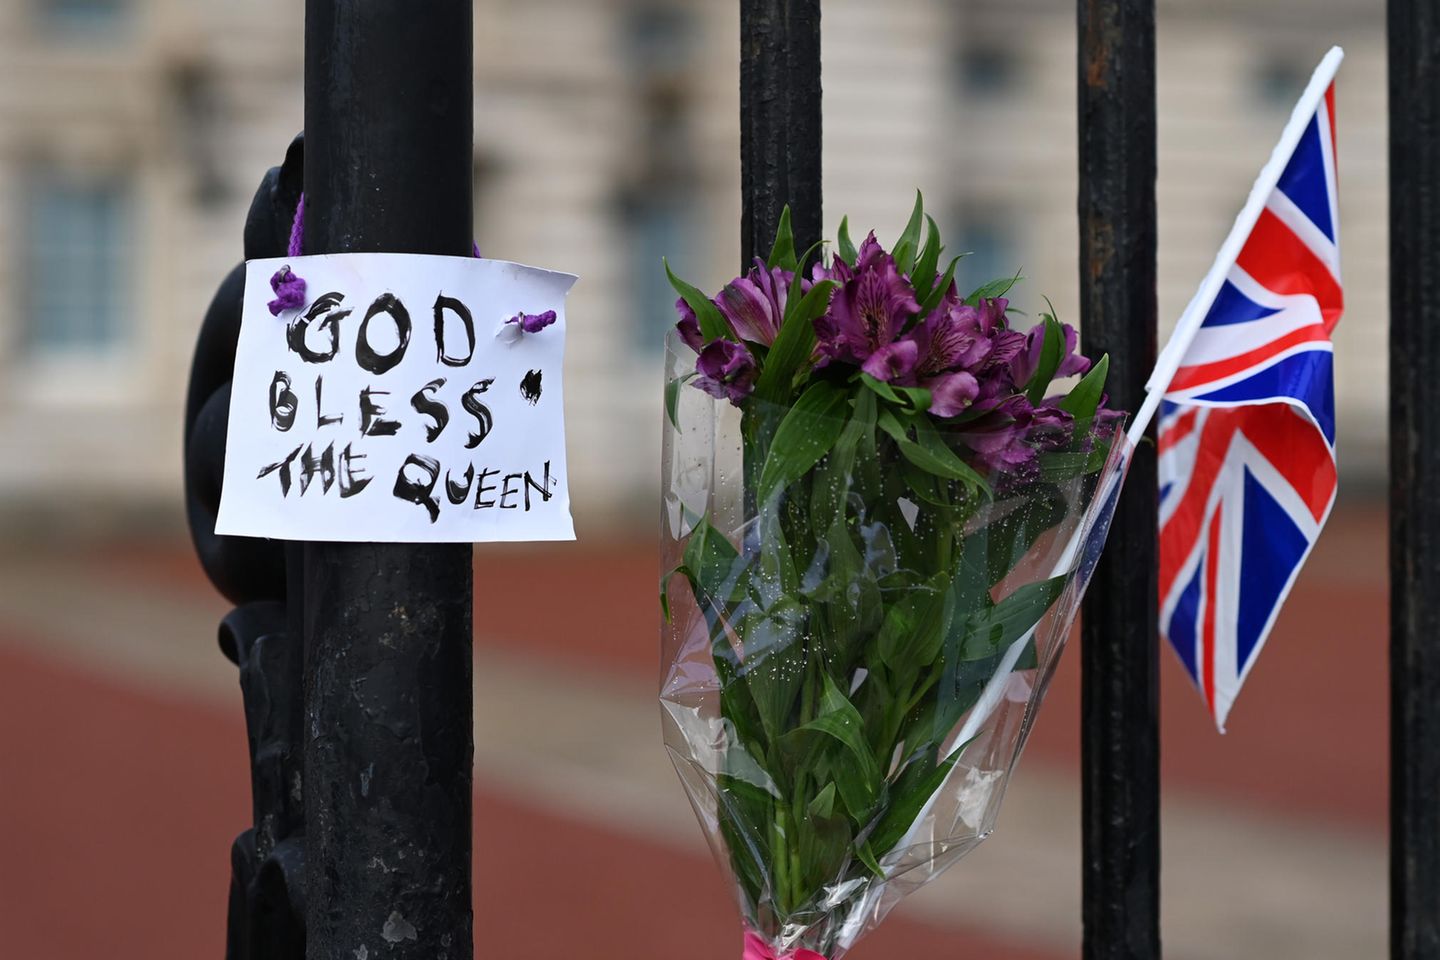 God bless the Queen: Viele solcher Trauerbekundungen wurden an das Tor des Buckingham Palastes hinterlassen.